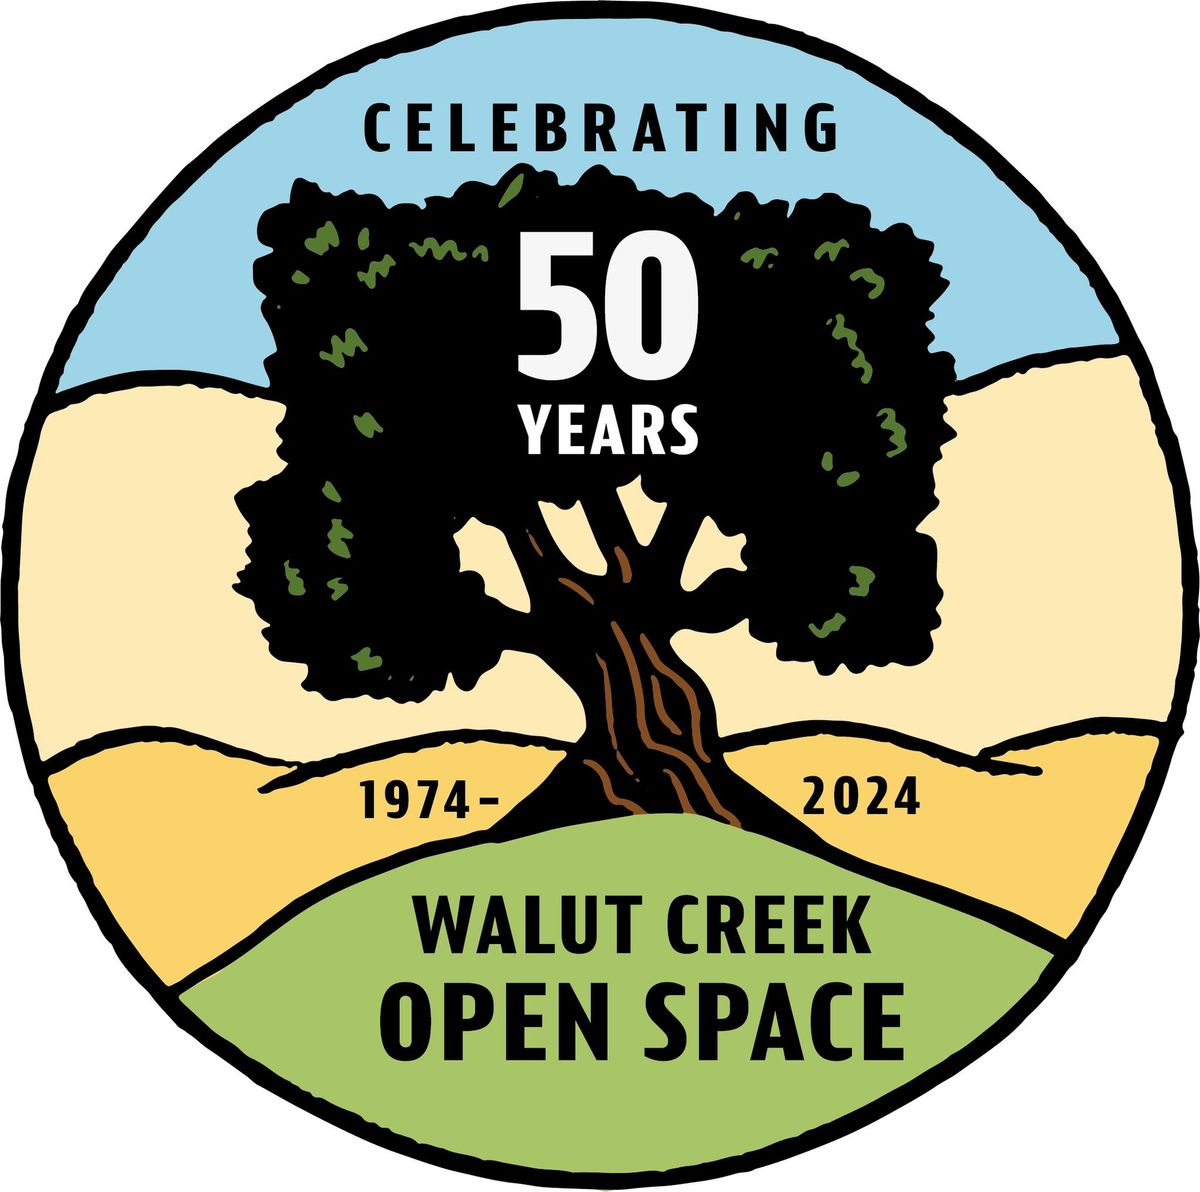 Walnut Creek Open Space 50 Year Anniversary Celebration